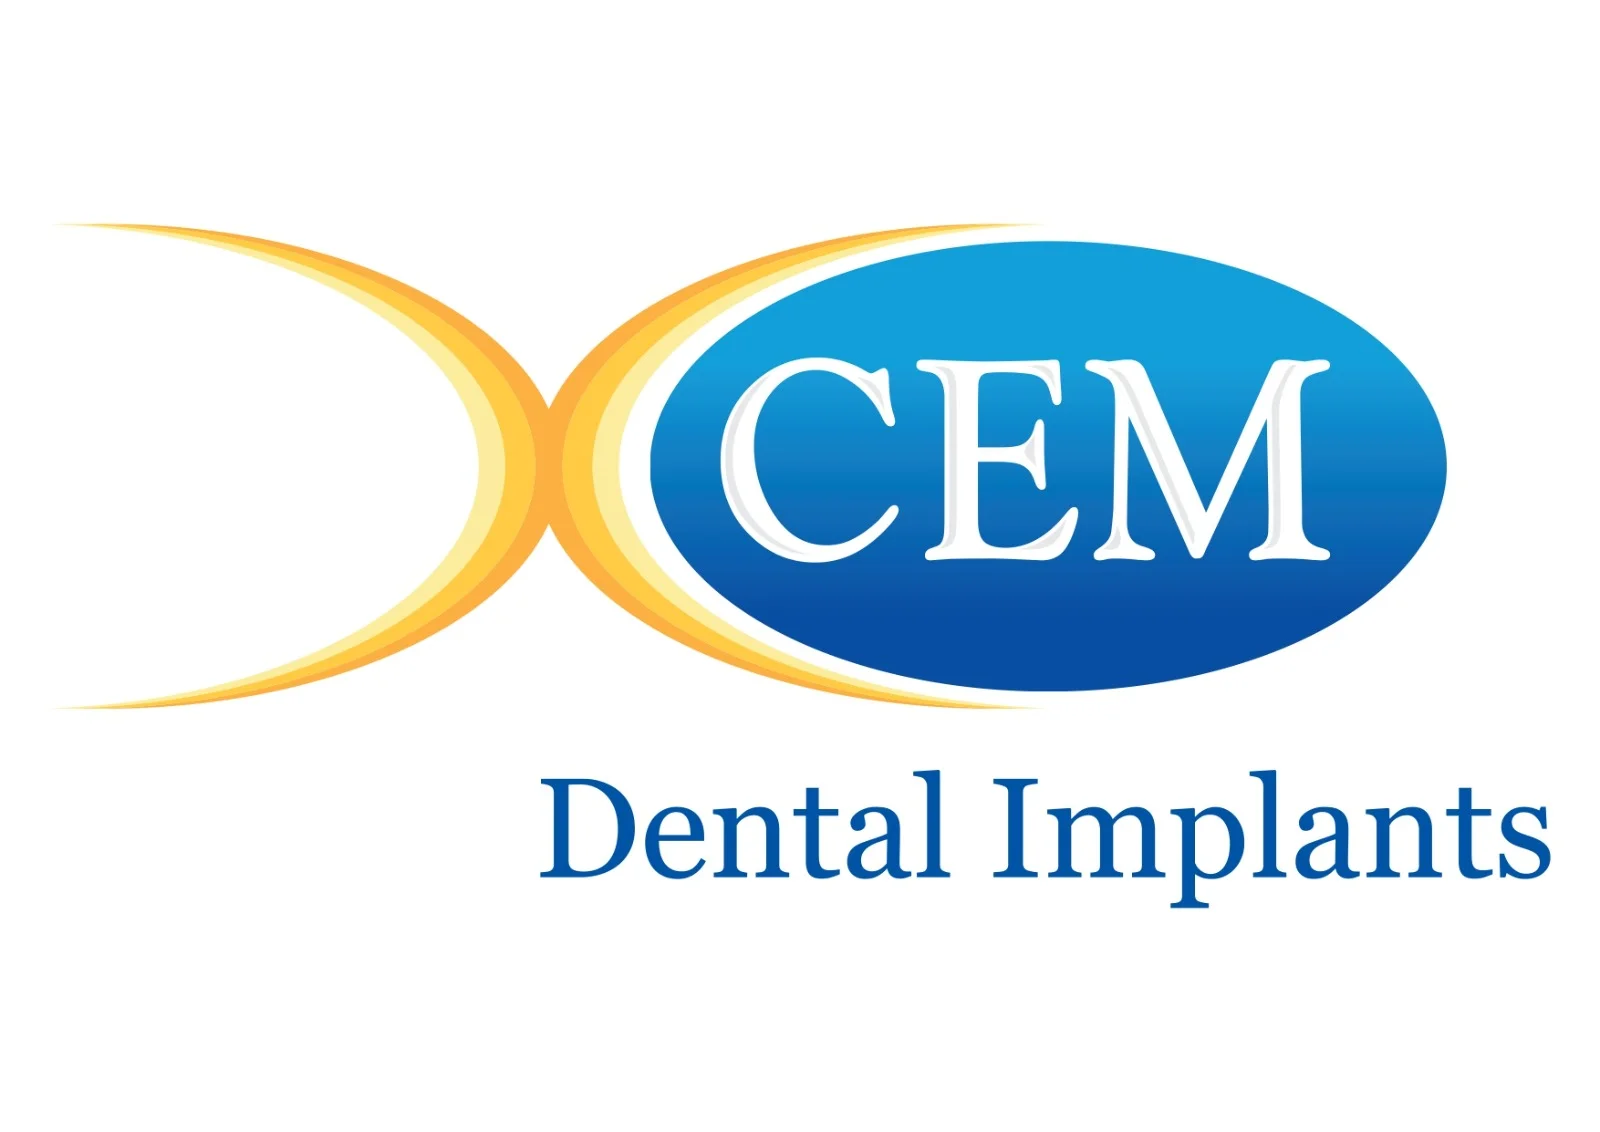 Xcem Dental Implants